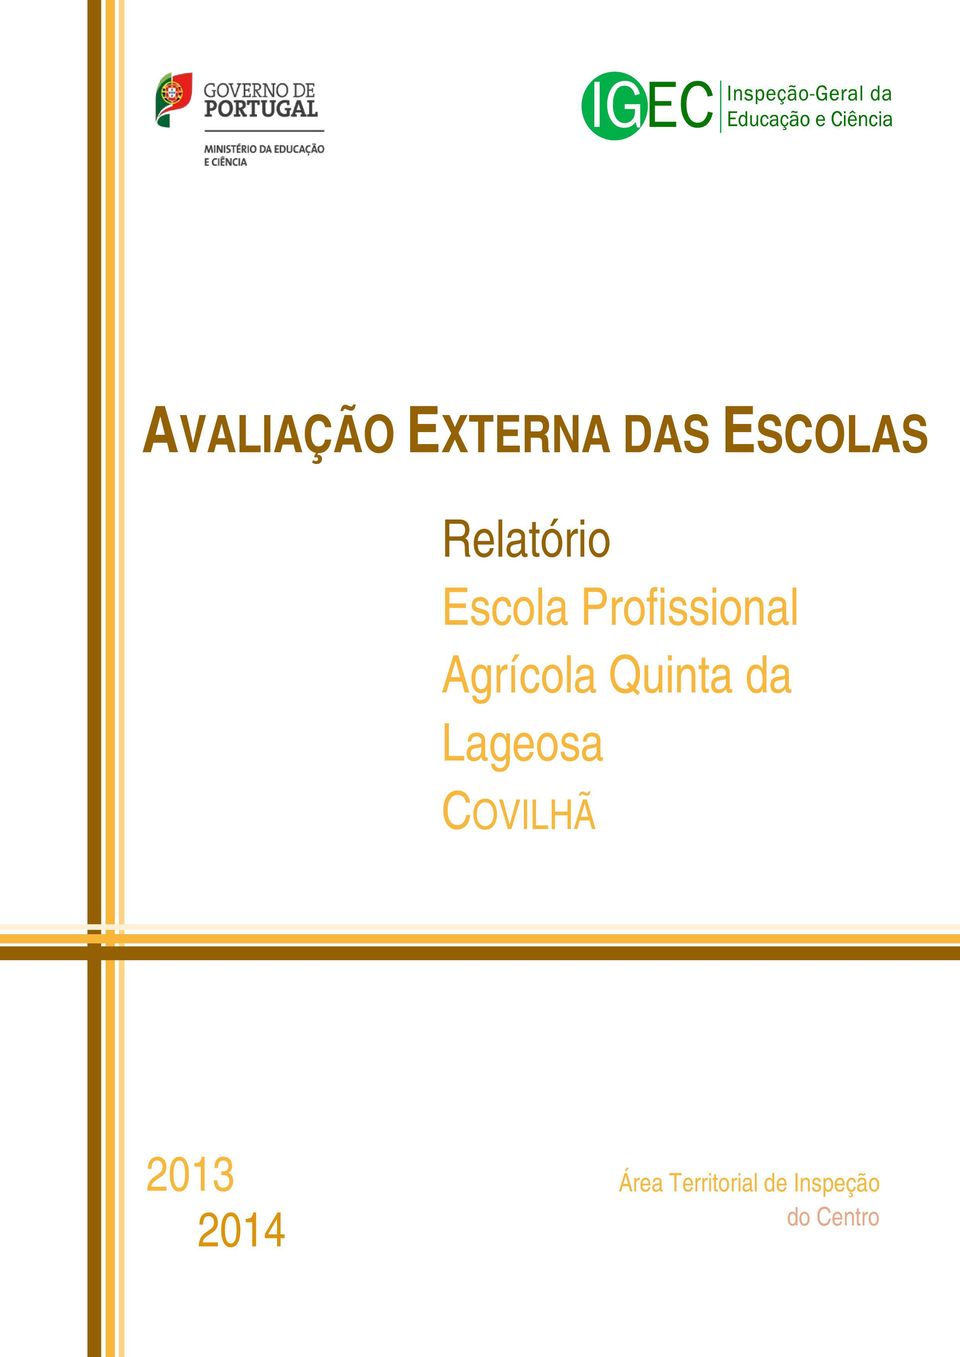 Agrícola Quinta da Lageosa COVILHÃ